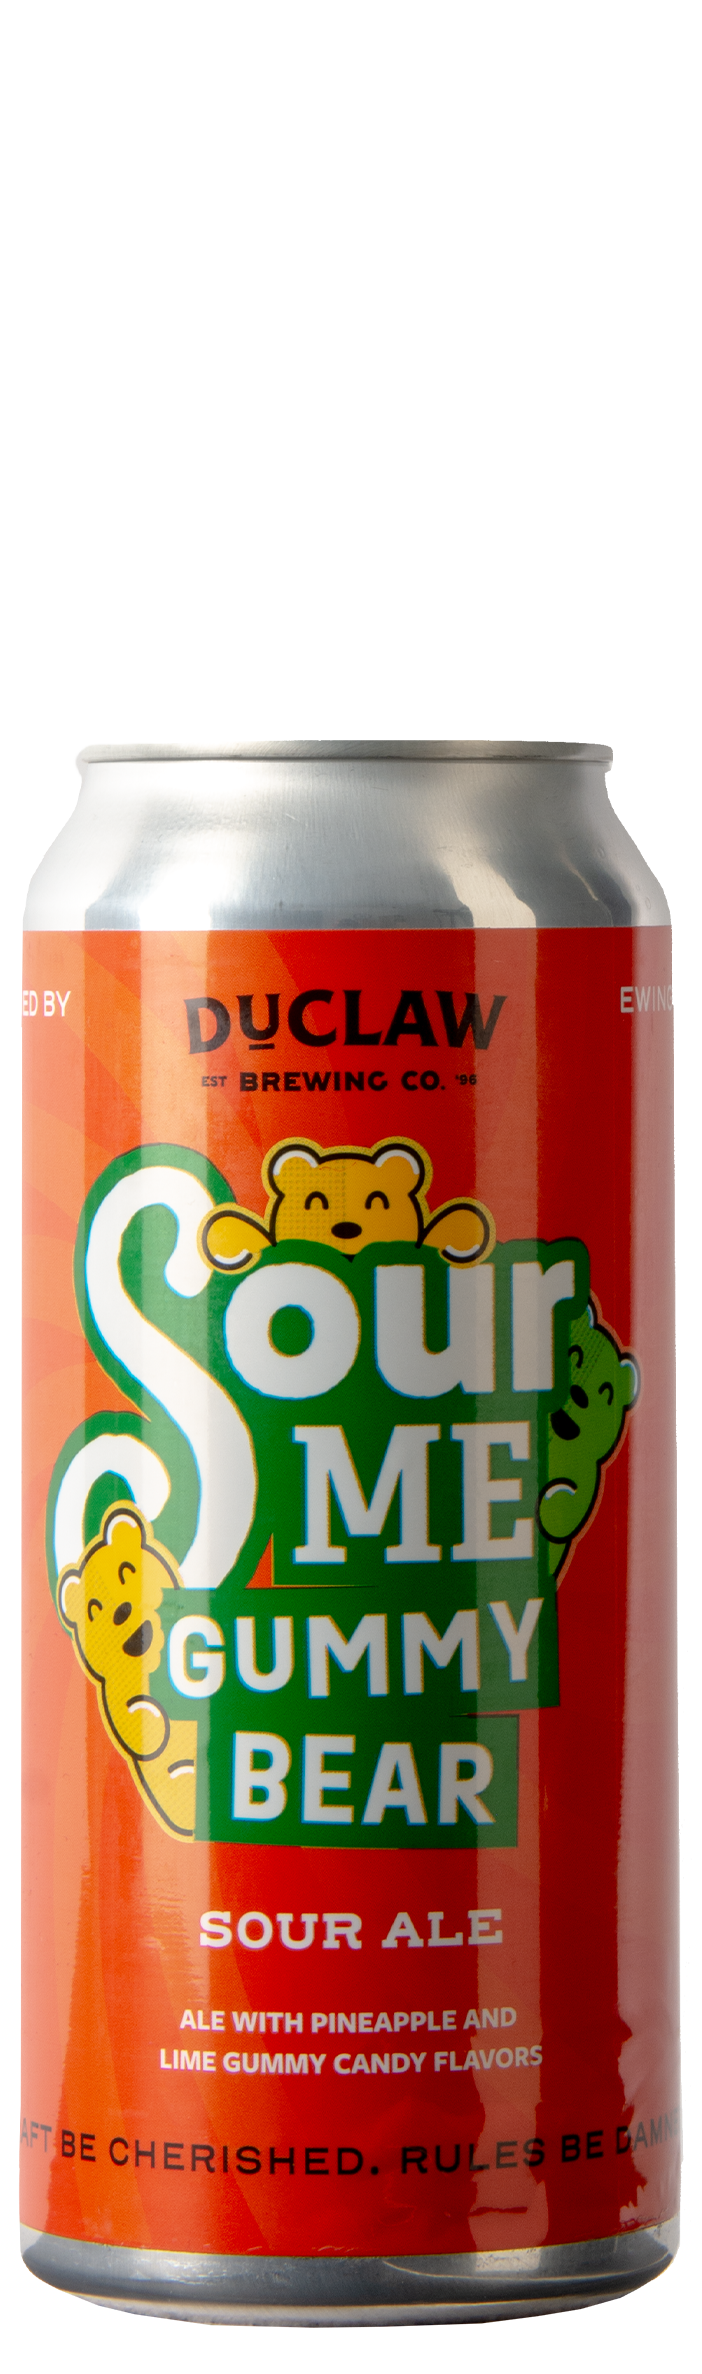 DuClaw Sour Me Gummy Bear